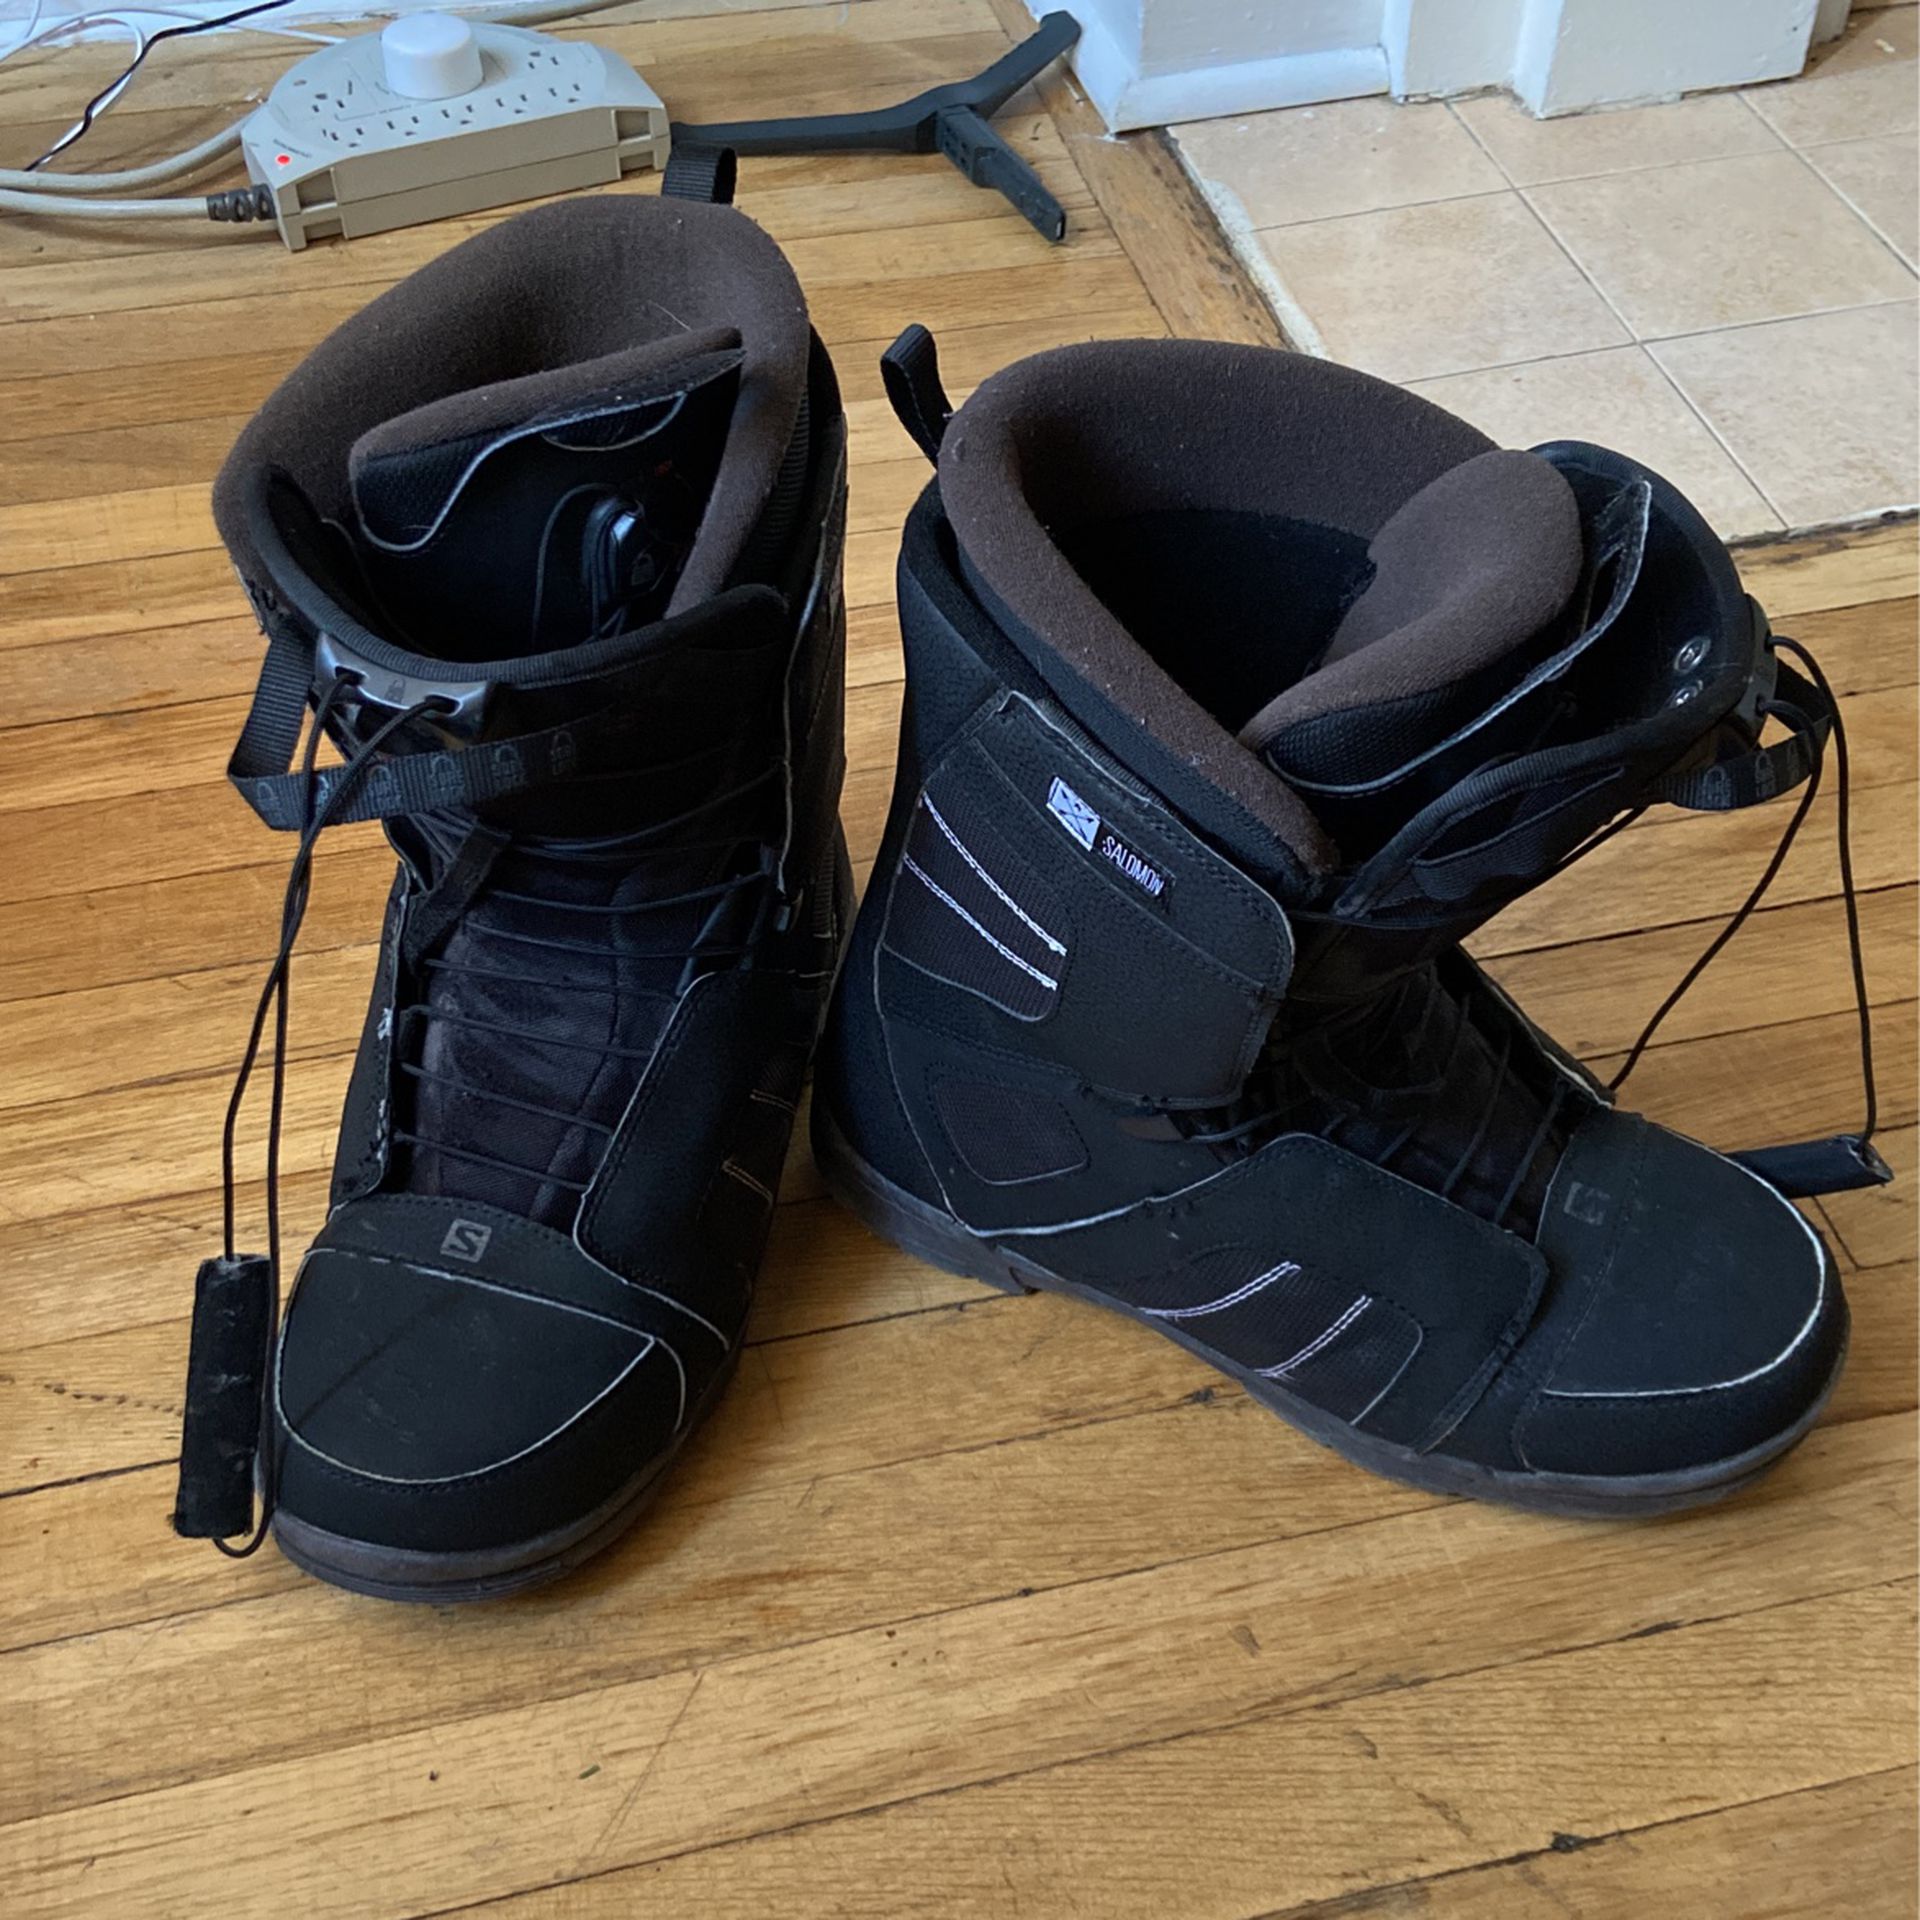 familie Grondwet snap salomon titan snowboard boots for Sale in Salt Lake City, UT - OfferUp